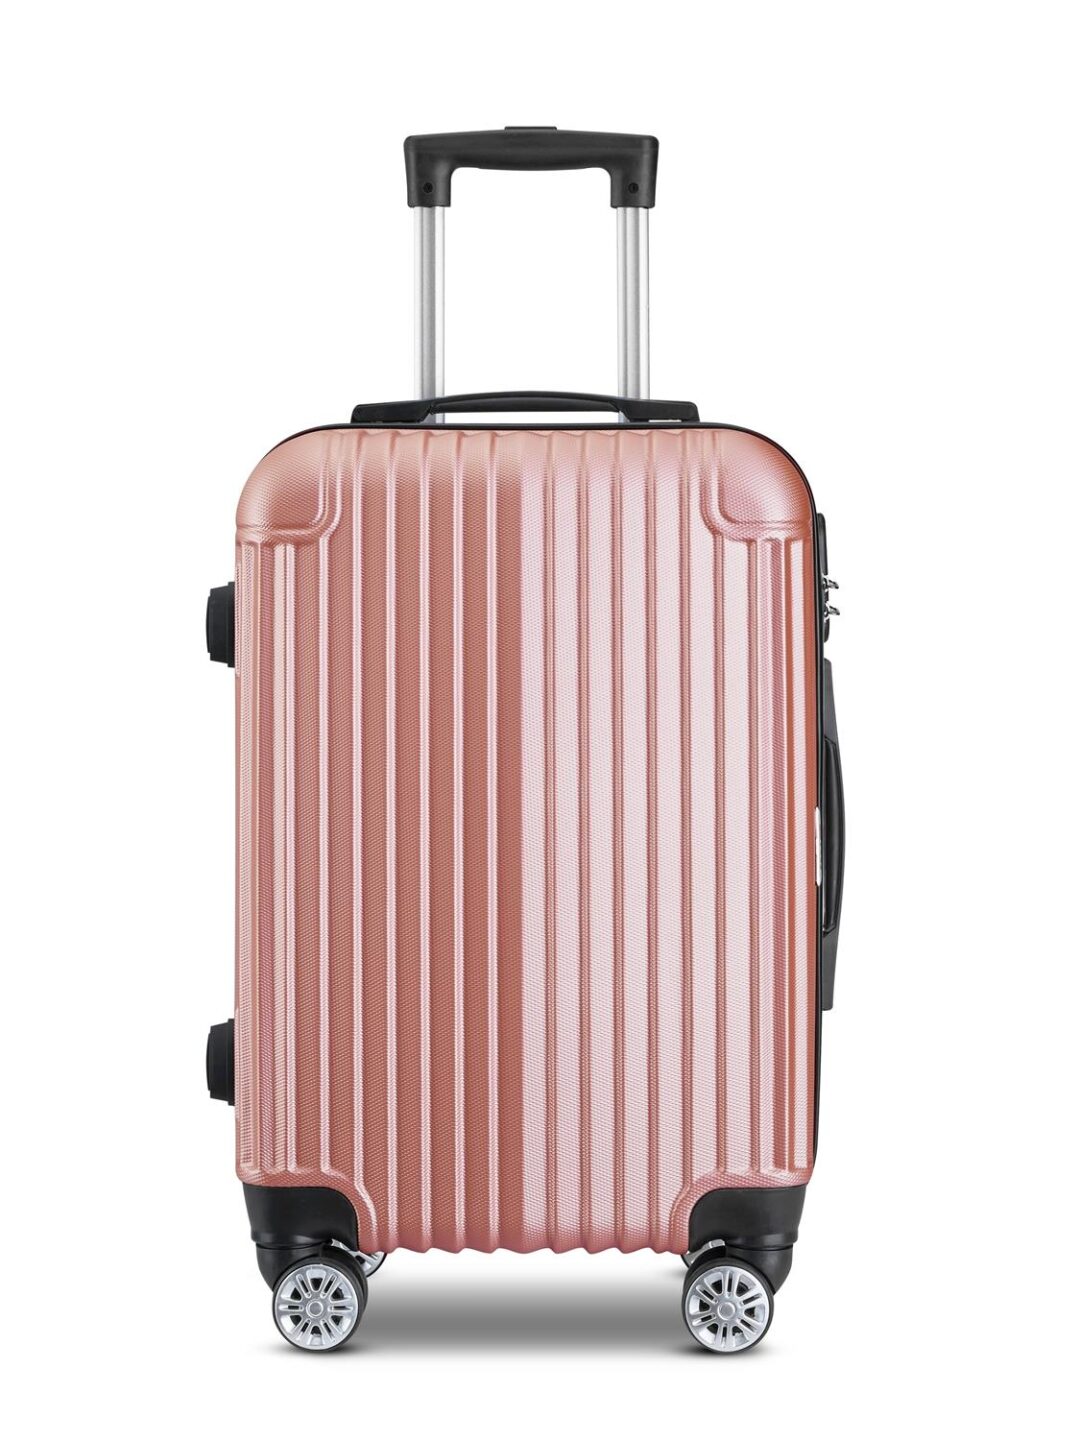 S/3 Βαλίτσα τρόλευ ταξιδίου abs με κλειδαριά ασφαλείας ροζ/χρυσό Home Plus 01.18.0024